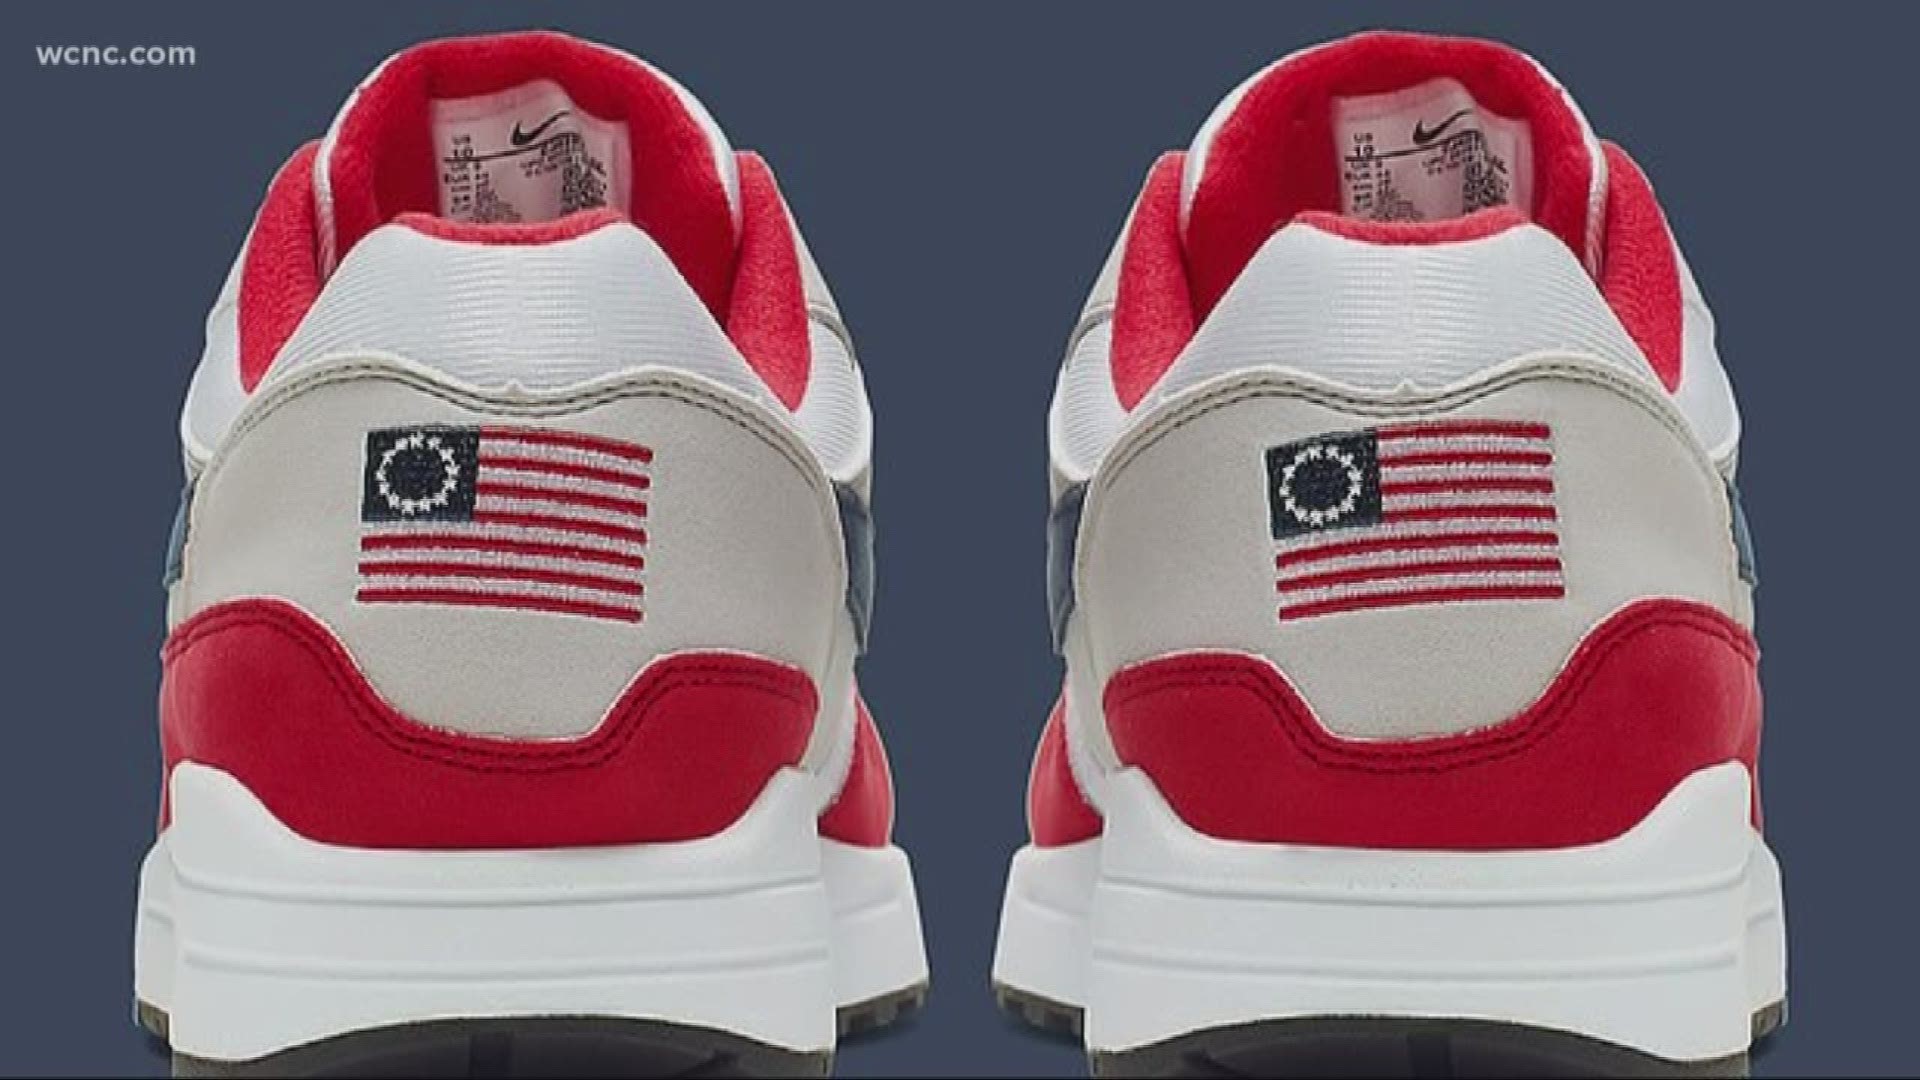 Nike scraps 'Betsy Ross Flag' Air Max 1 